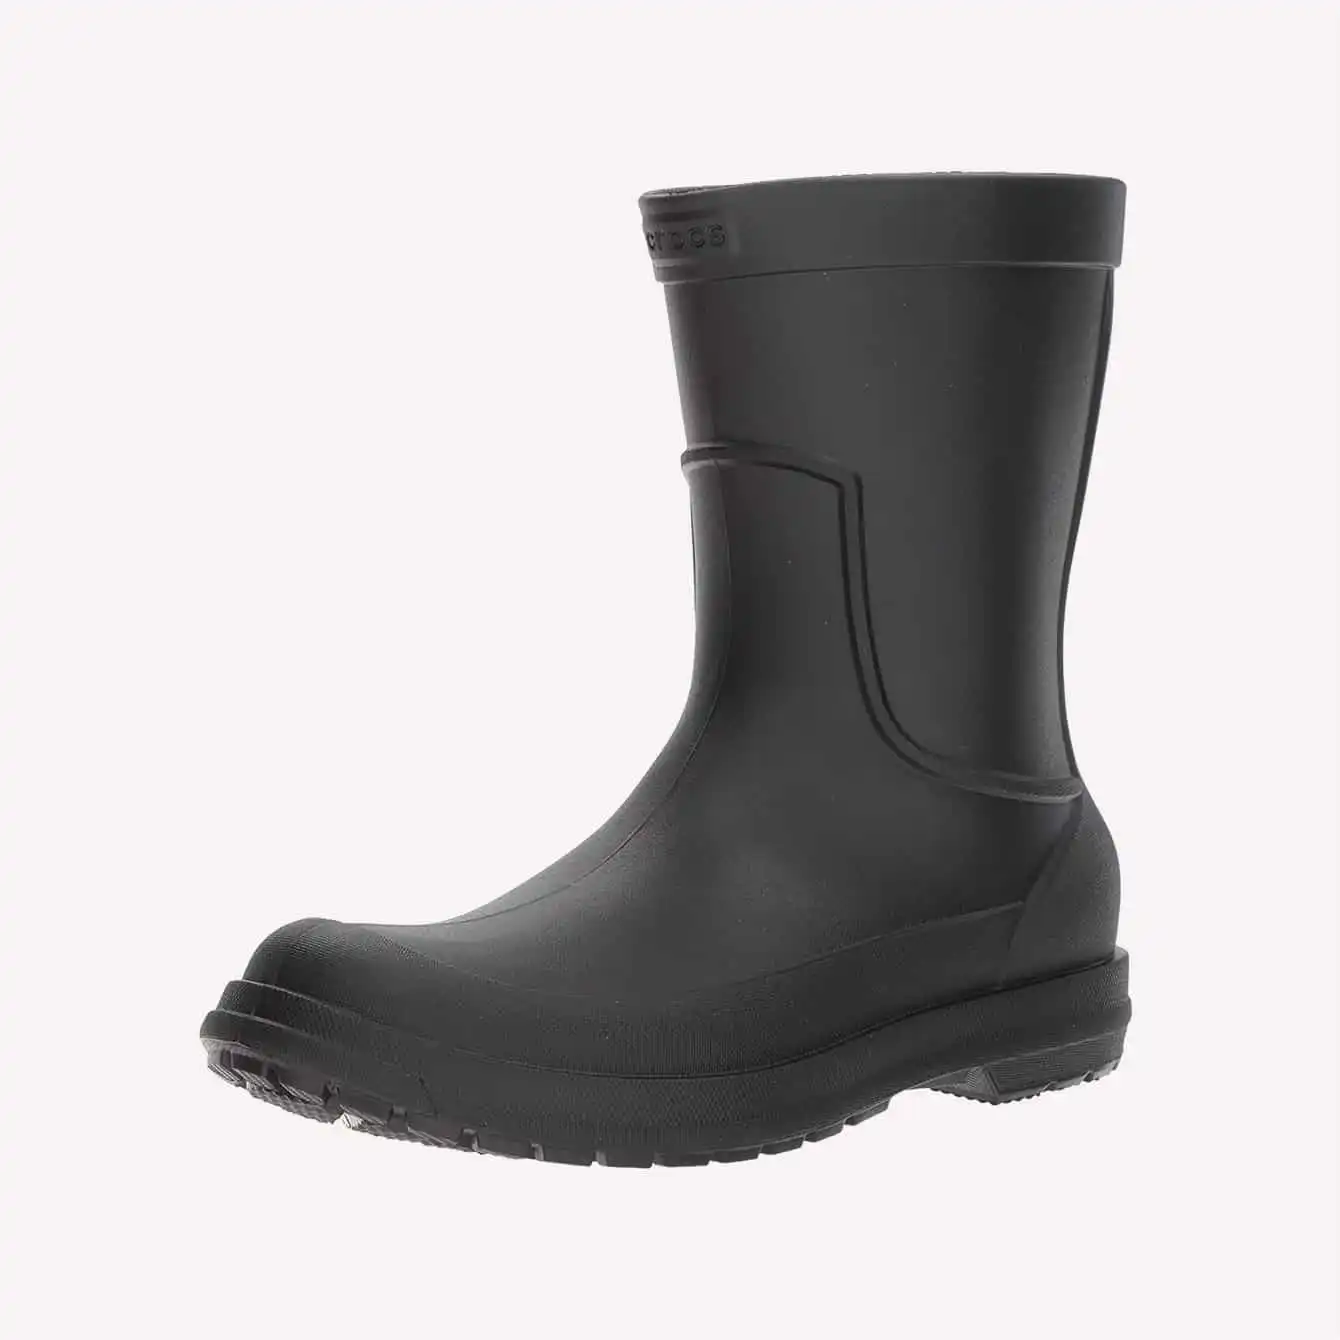 The Best Rain Boots for Men (No More Wet Socks!)